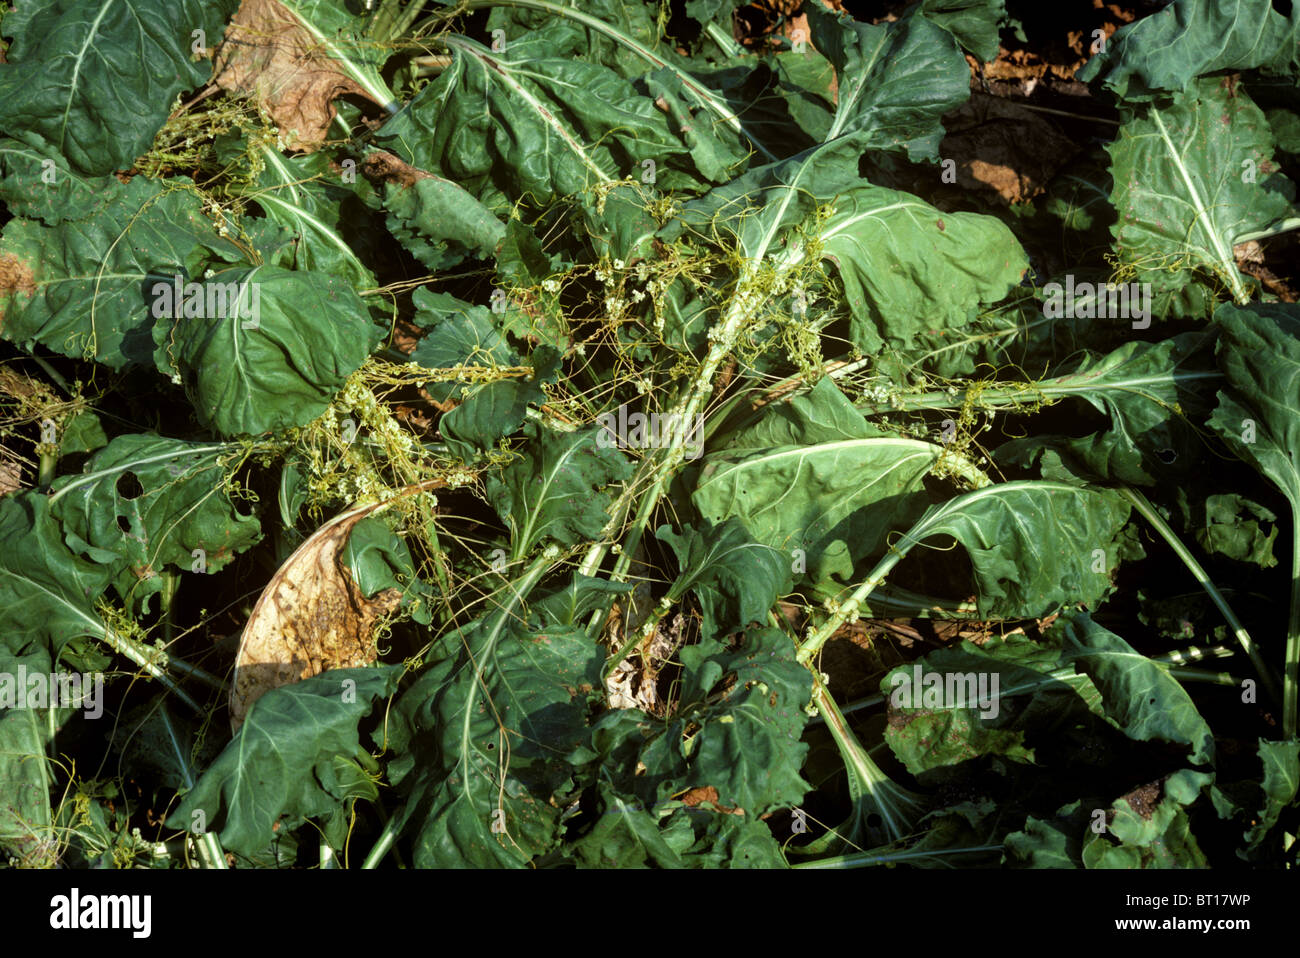 Dodder or strangleweed (Cuscuta epithymum) parasitic weed on mature sugar beet, Greece Stock Photo